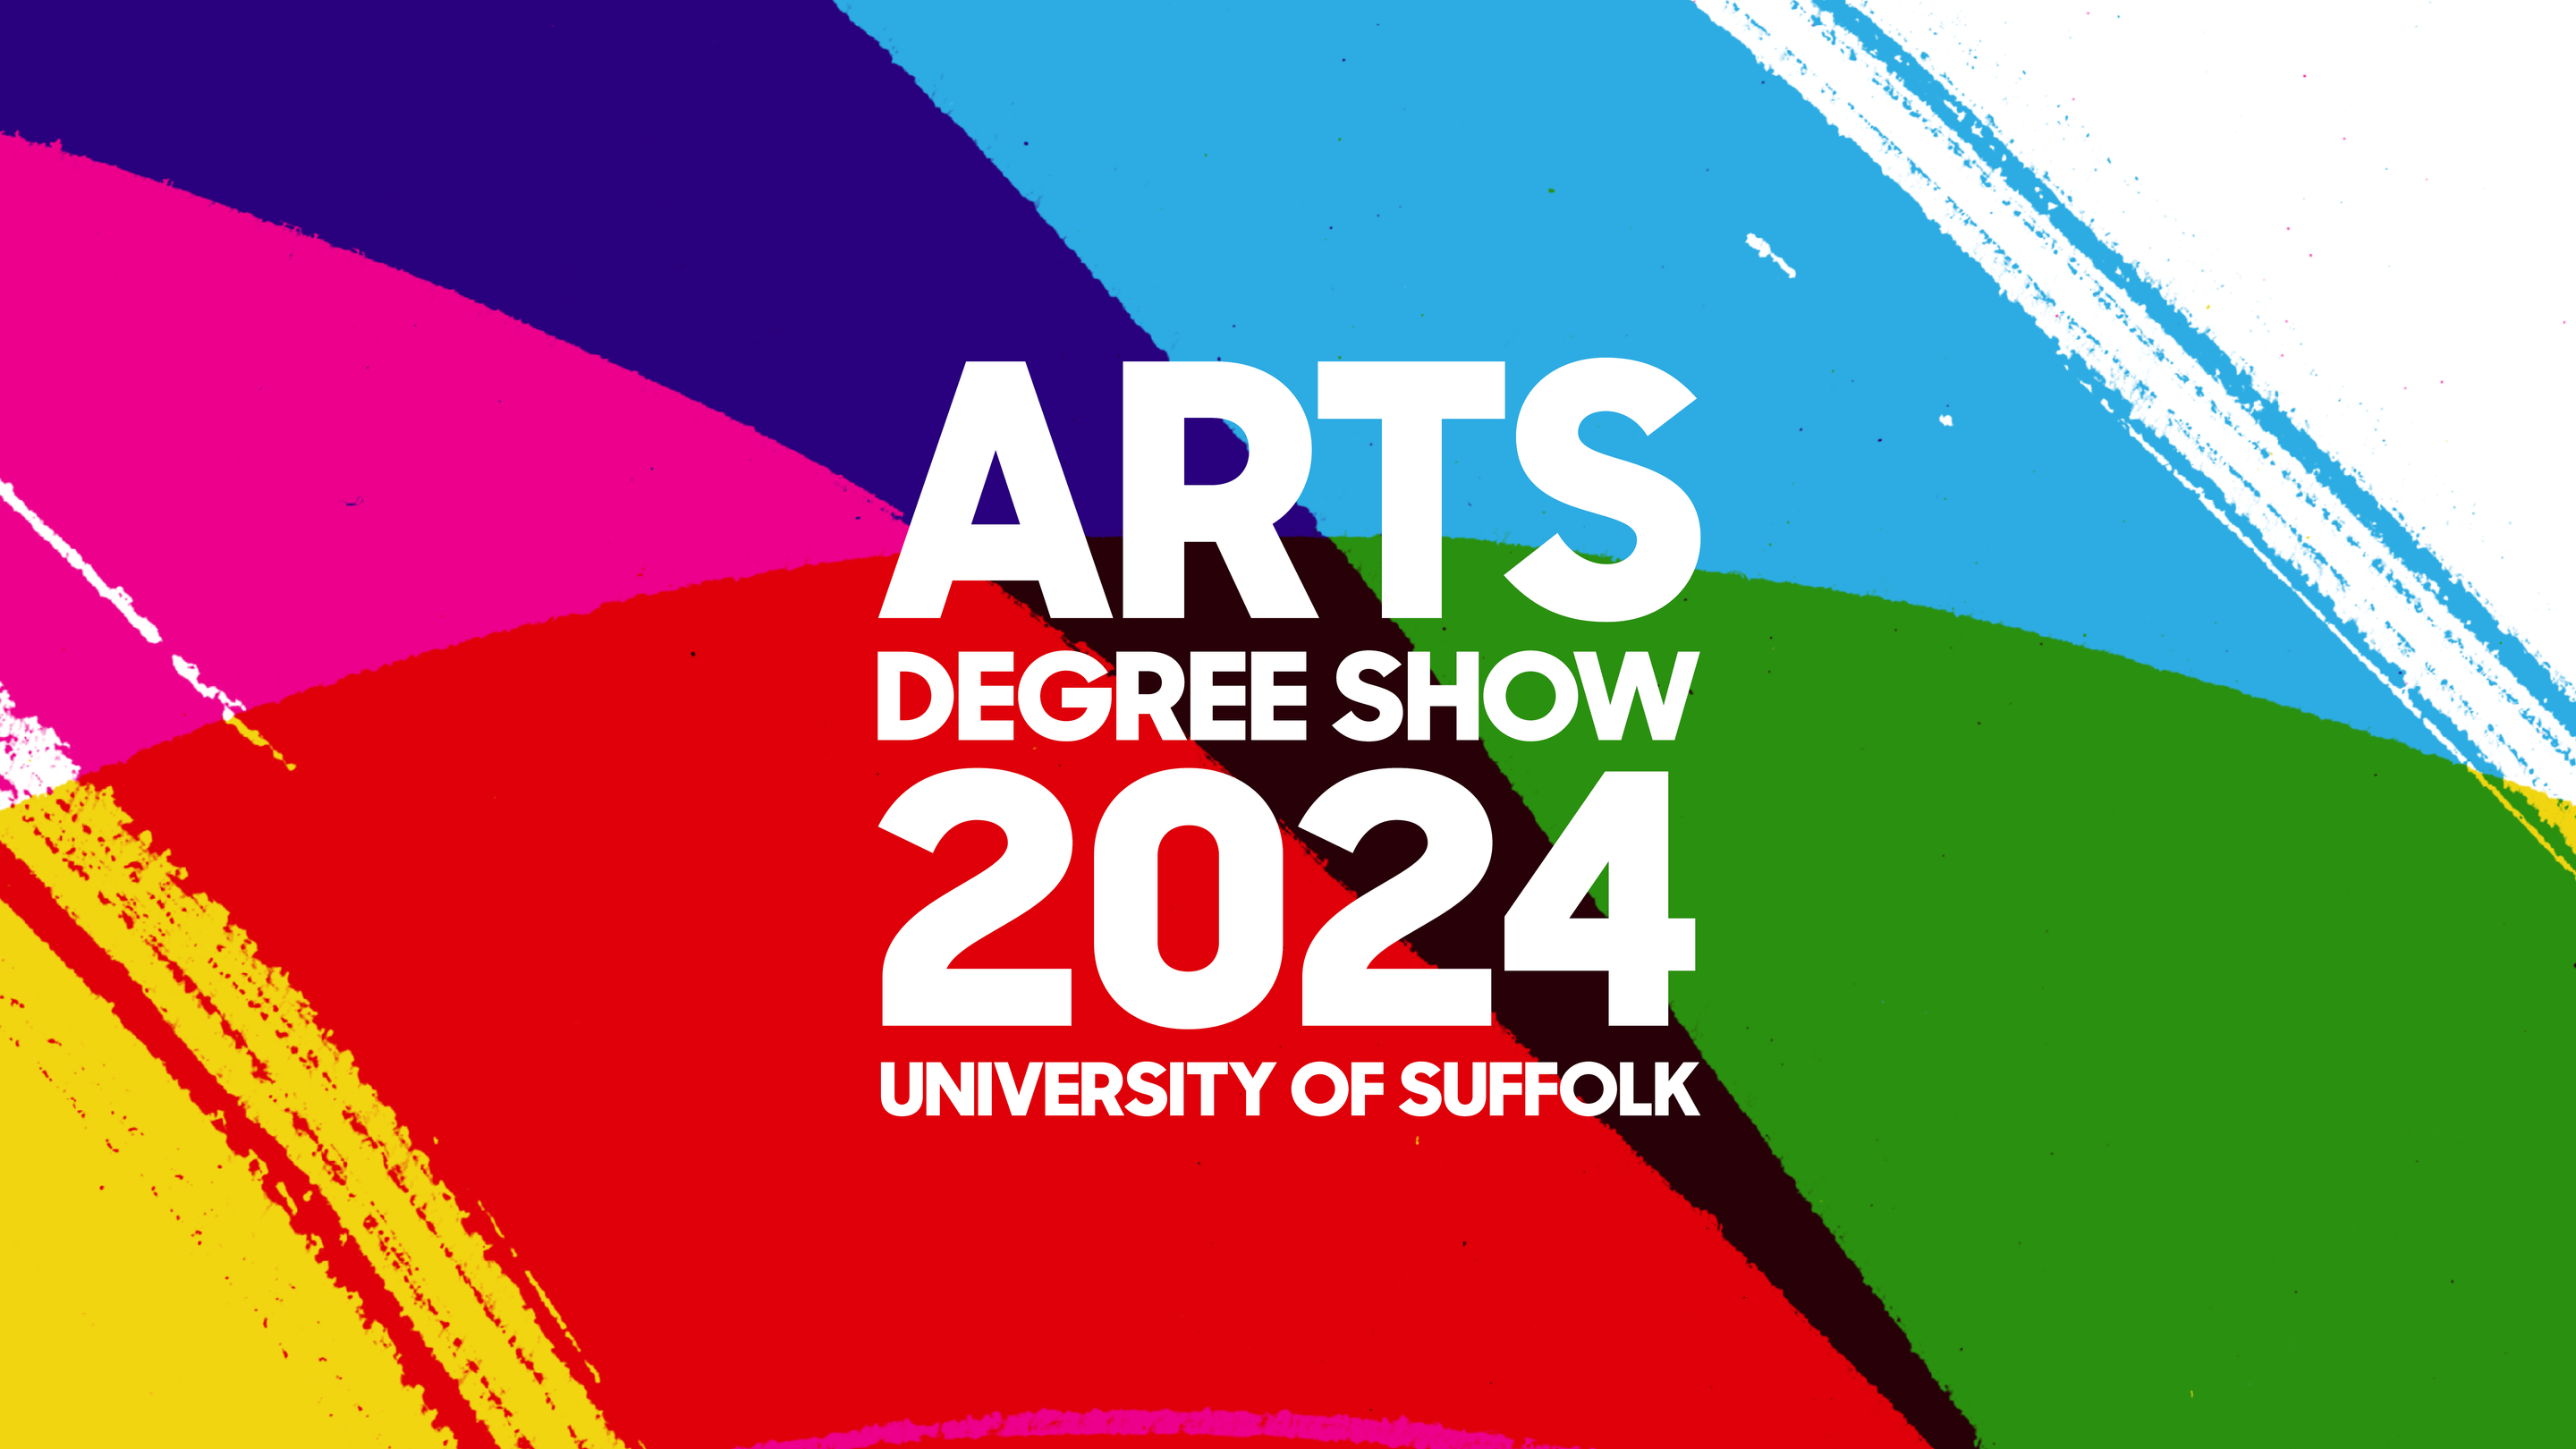 Arts Degree Show 2024 logo landscape